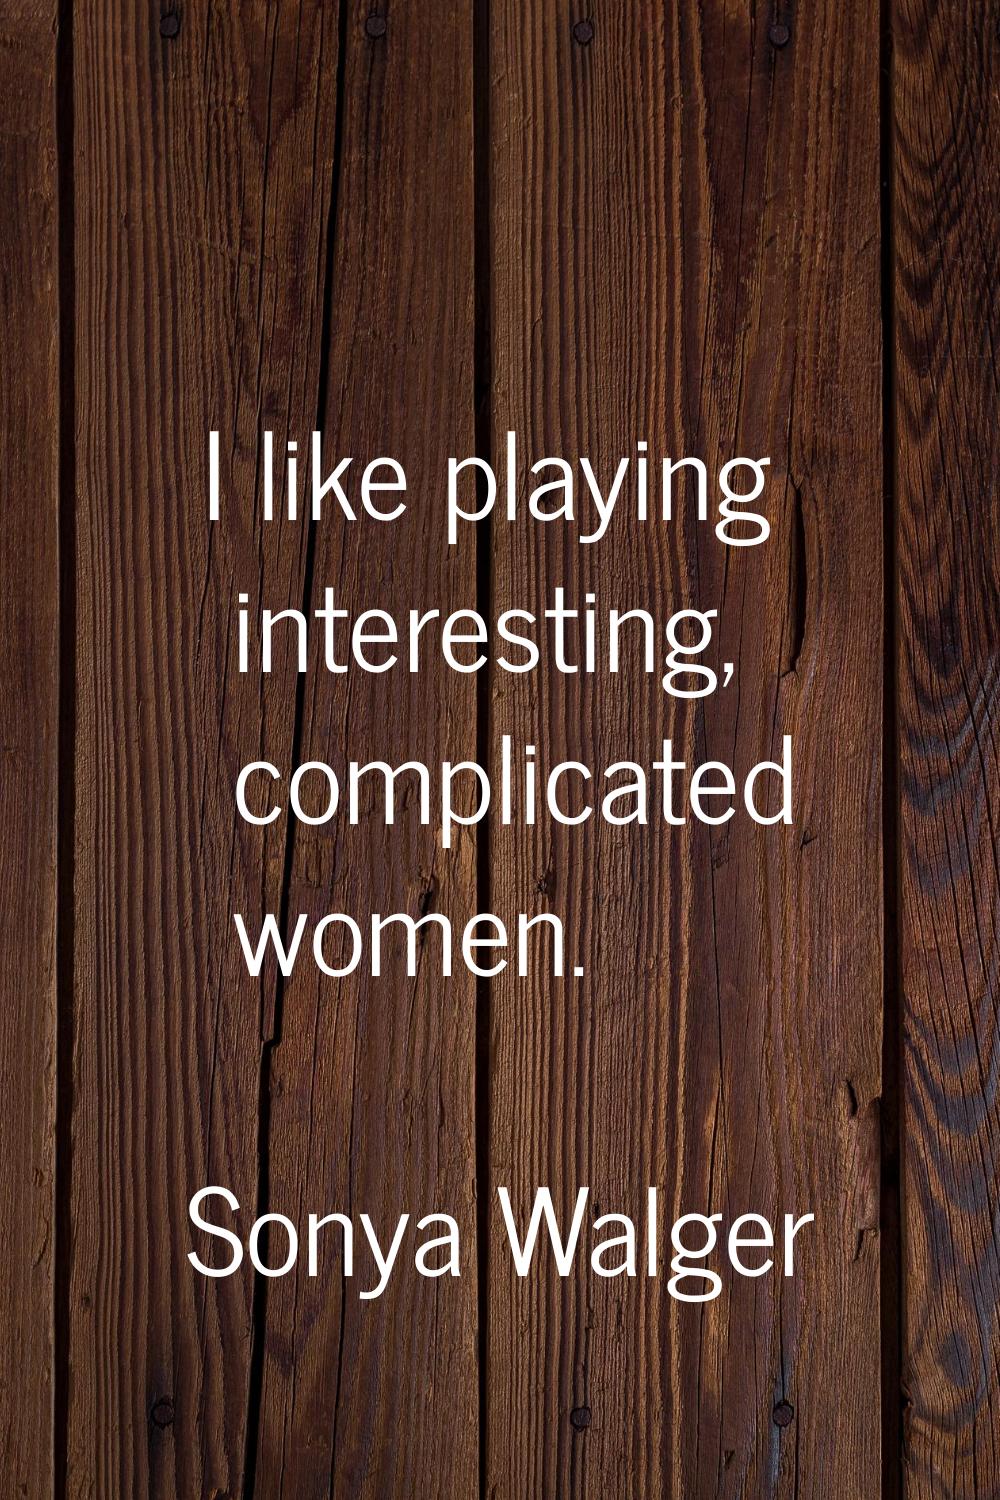 I like playing interesting, complicated women.